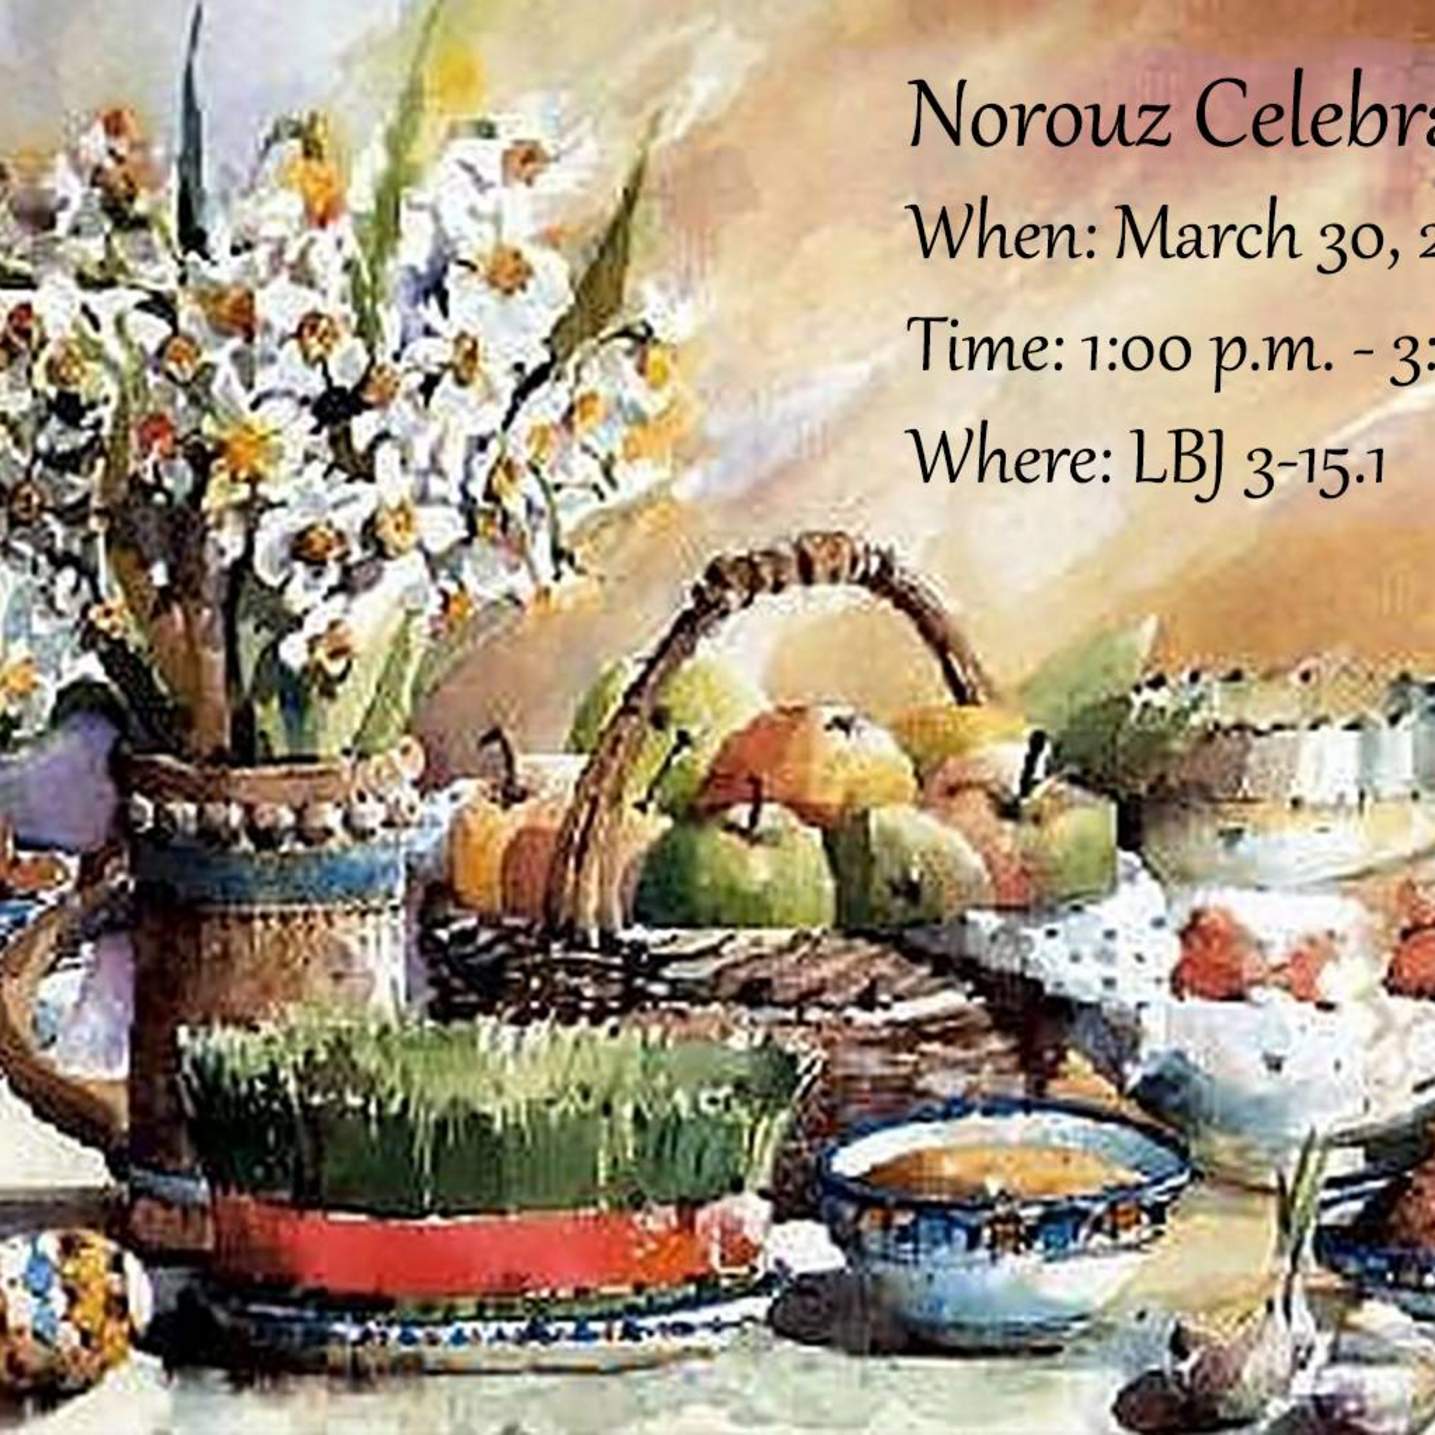  Spring 2018 flyer for Norouz Celebration. March 30, 2018. 1 PM - 3 PM. LBJ 3-15.1